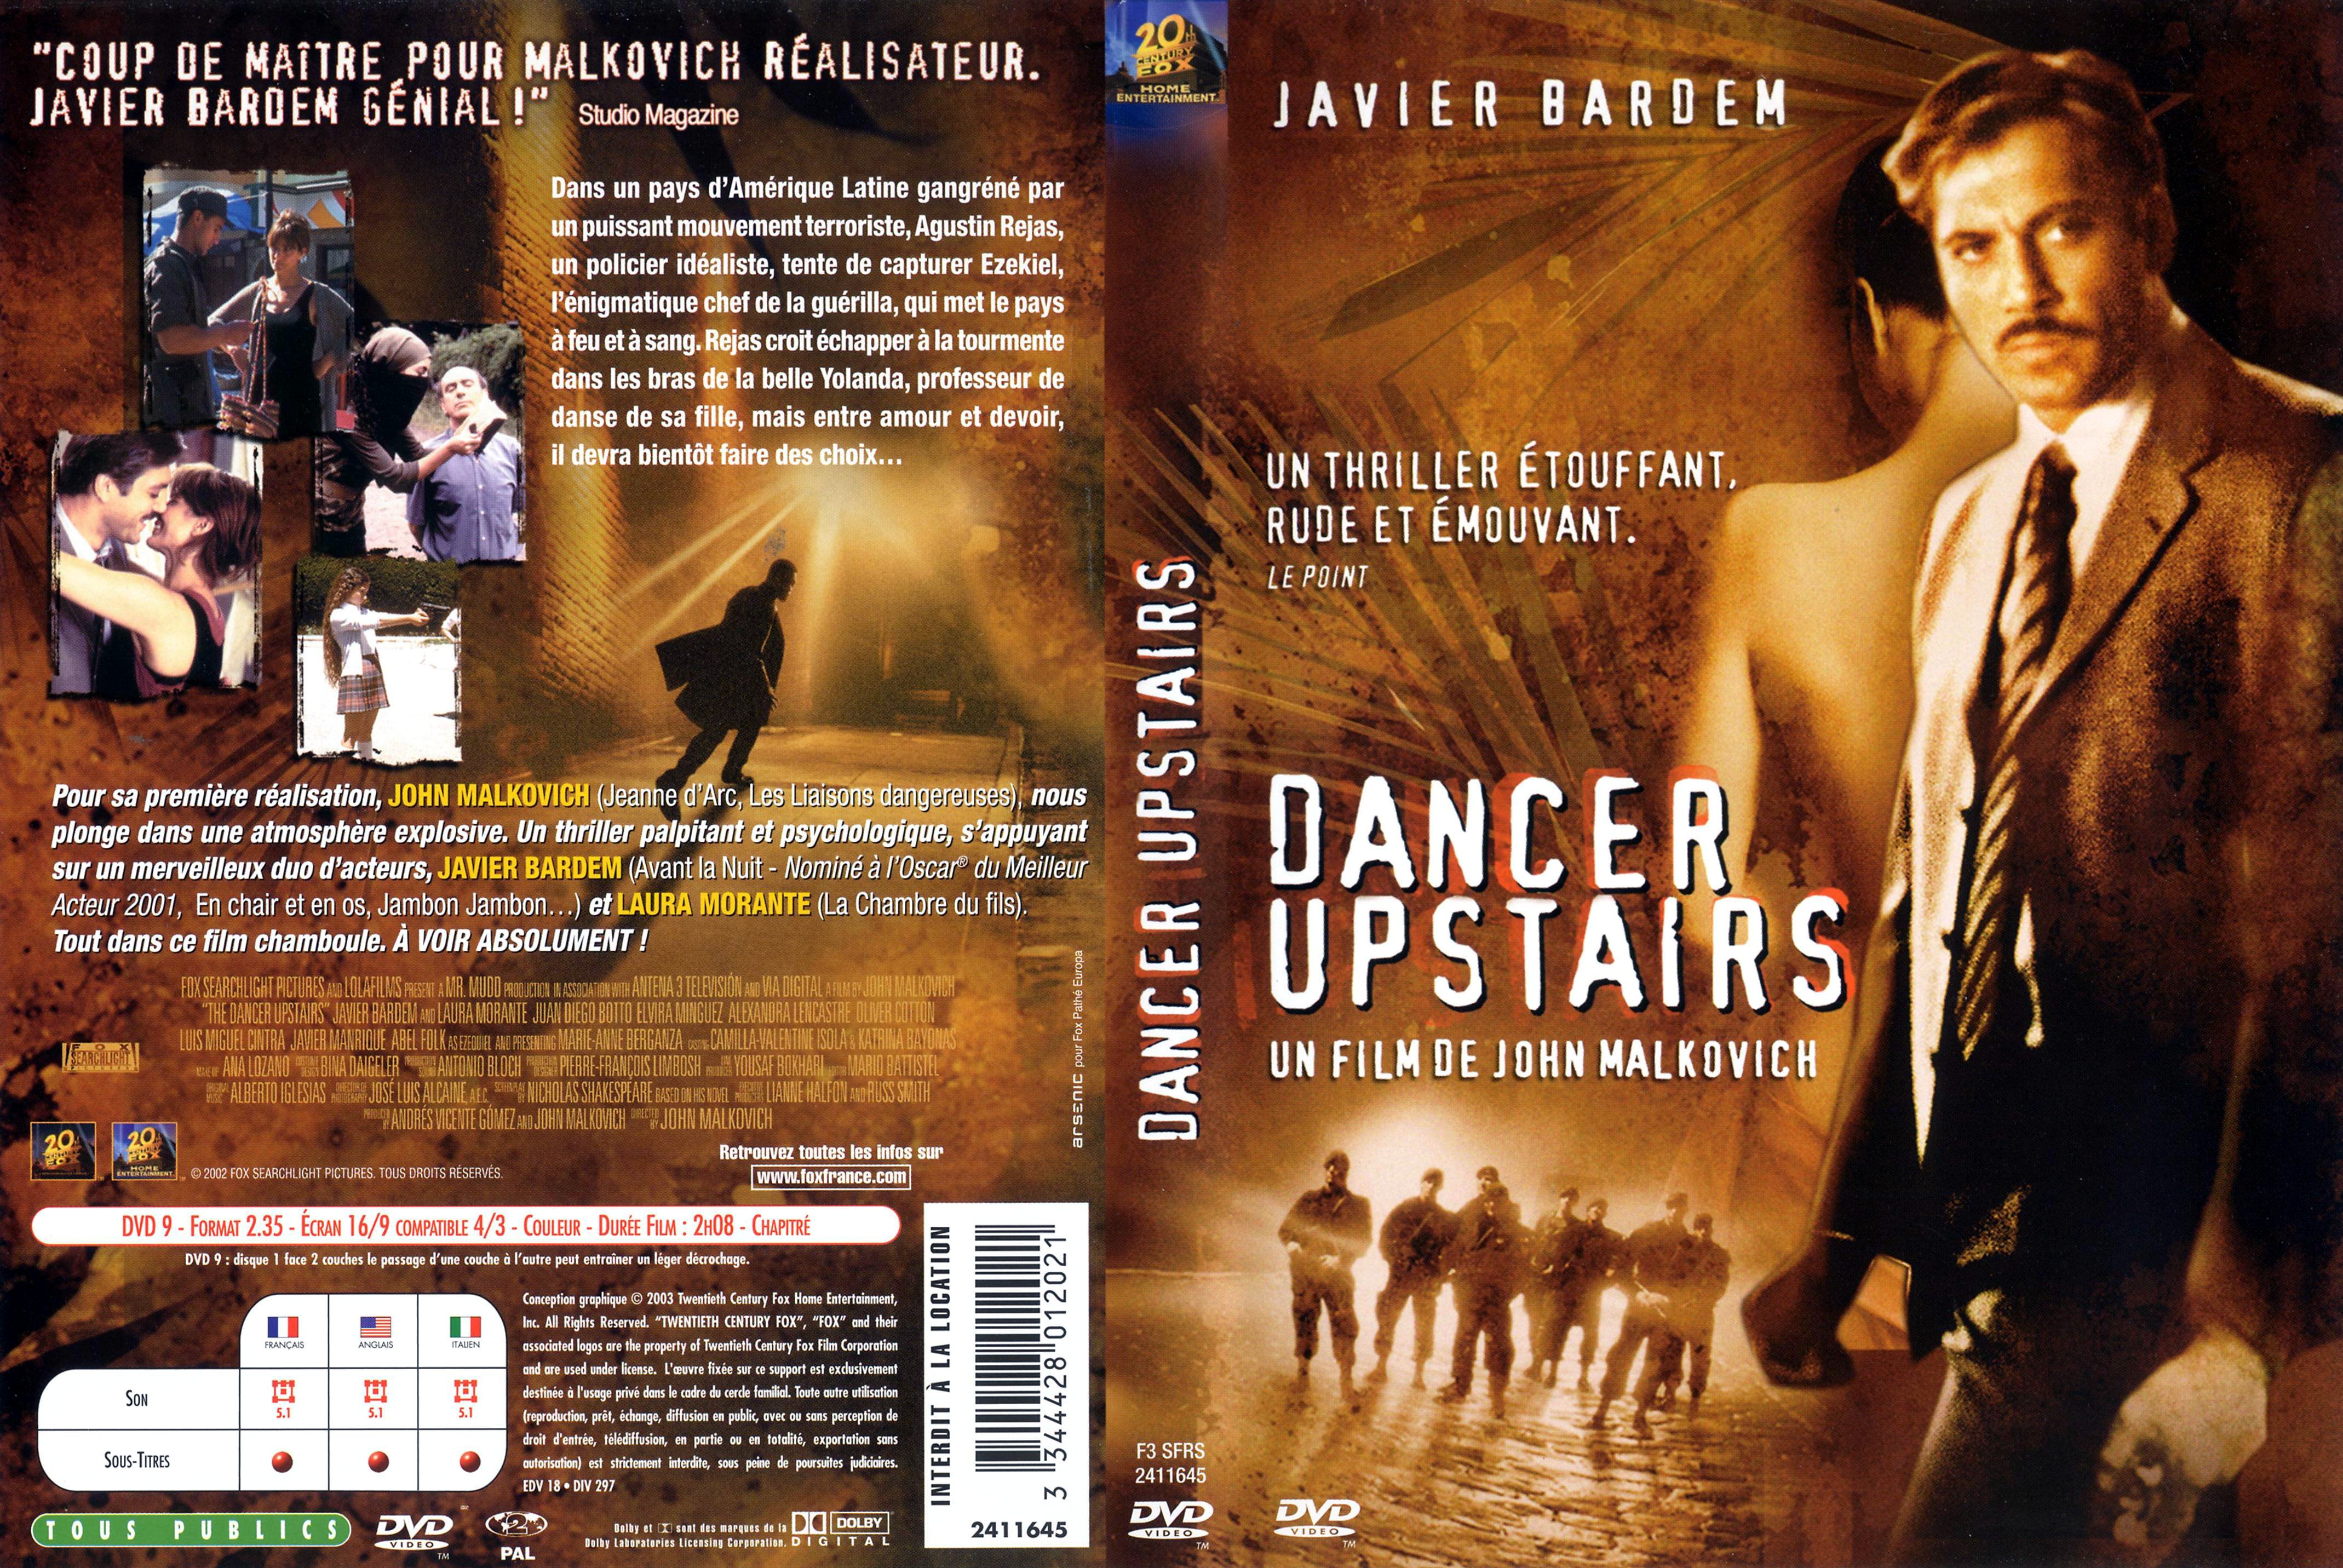 Jaquette DVD Dancer upstairs